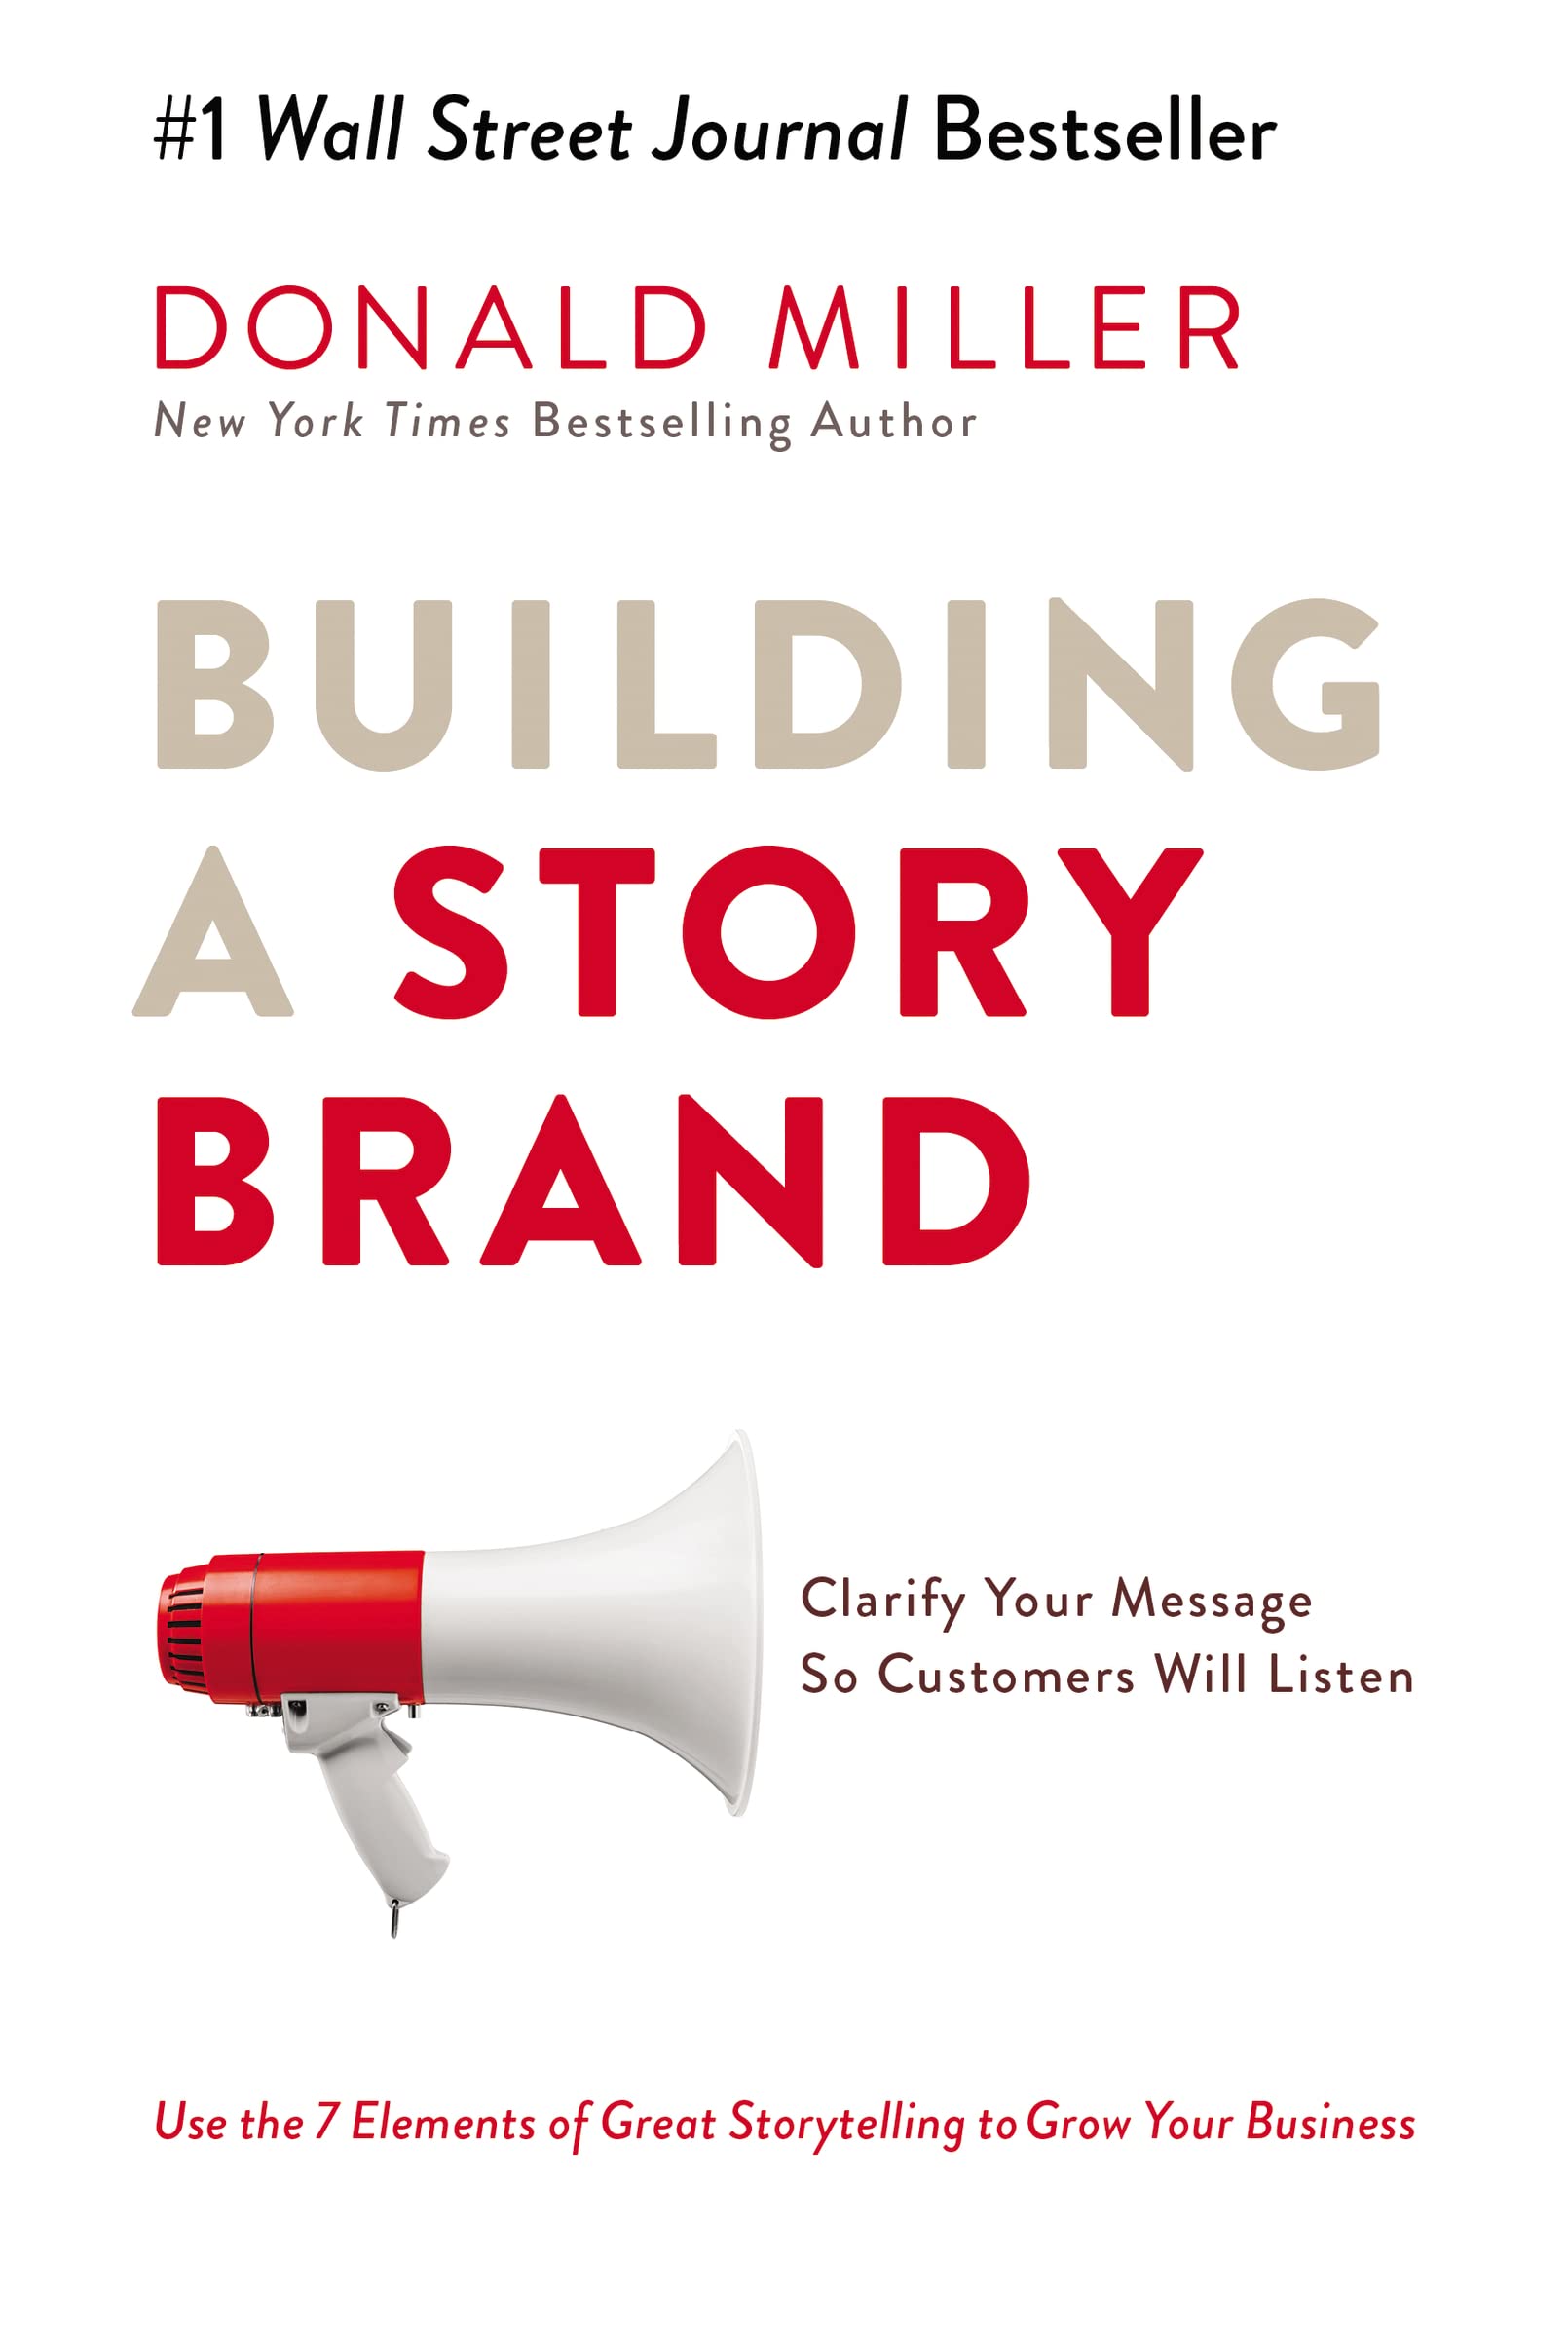 Building a Storybrand - Donald Miller